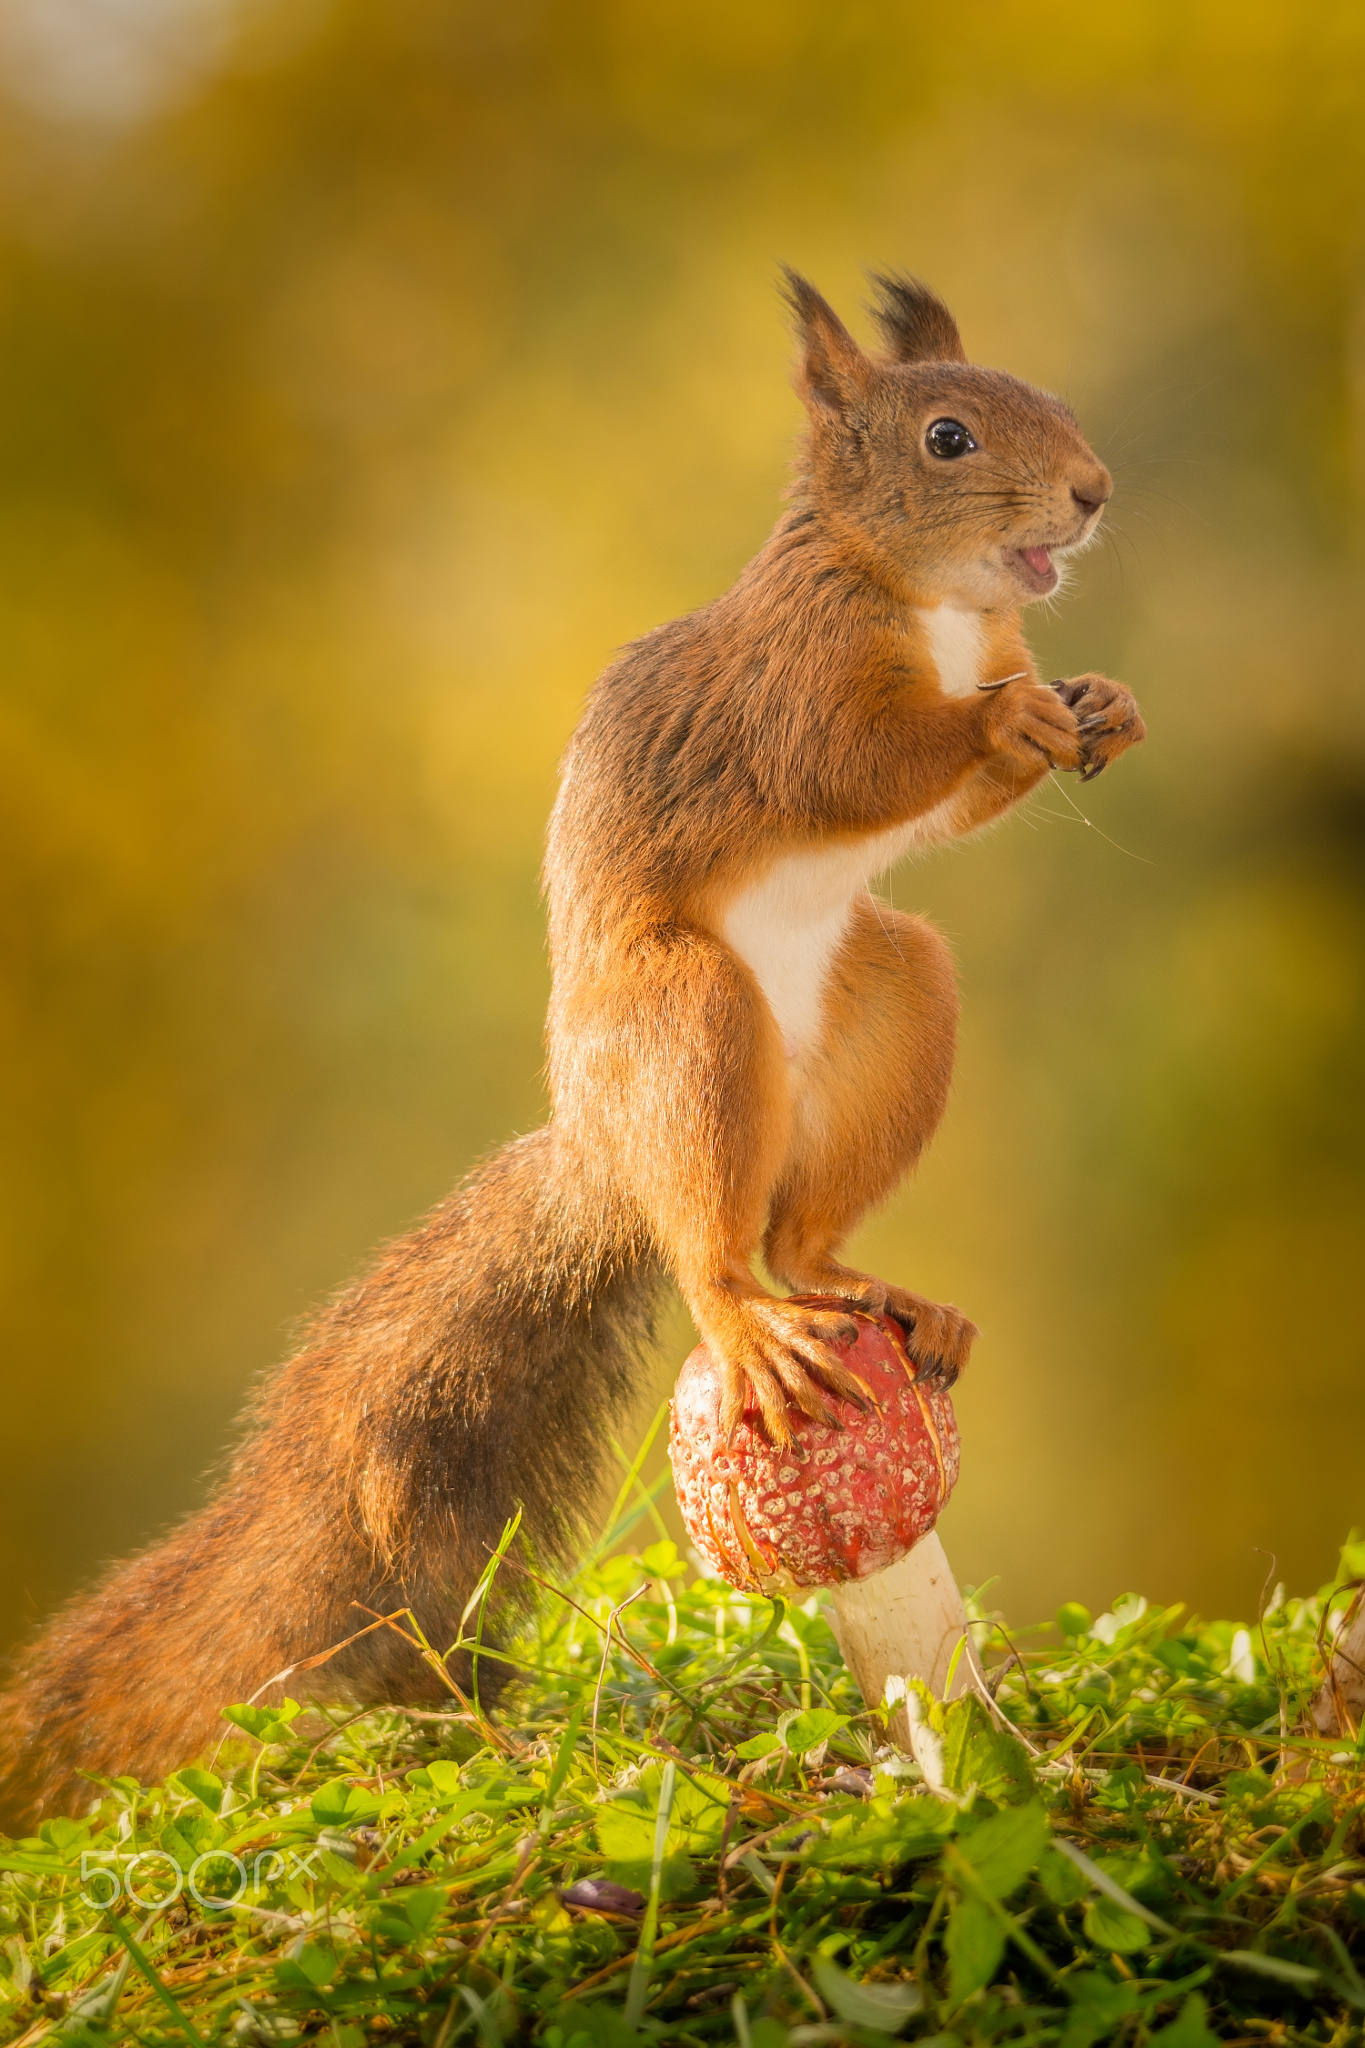 red squirrel standing on mushroom. Geert Weggen | Nutty totties ...